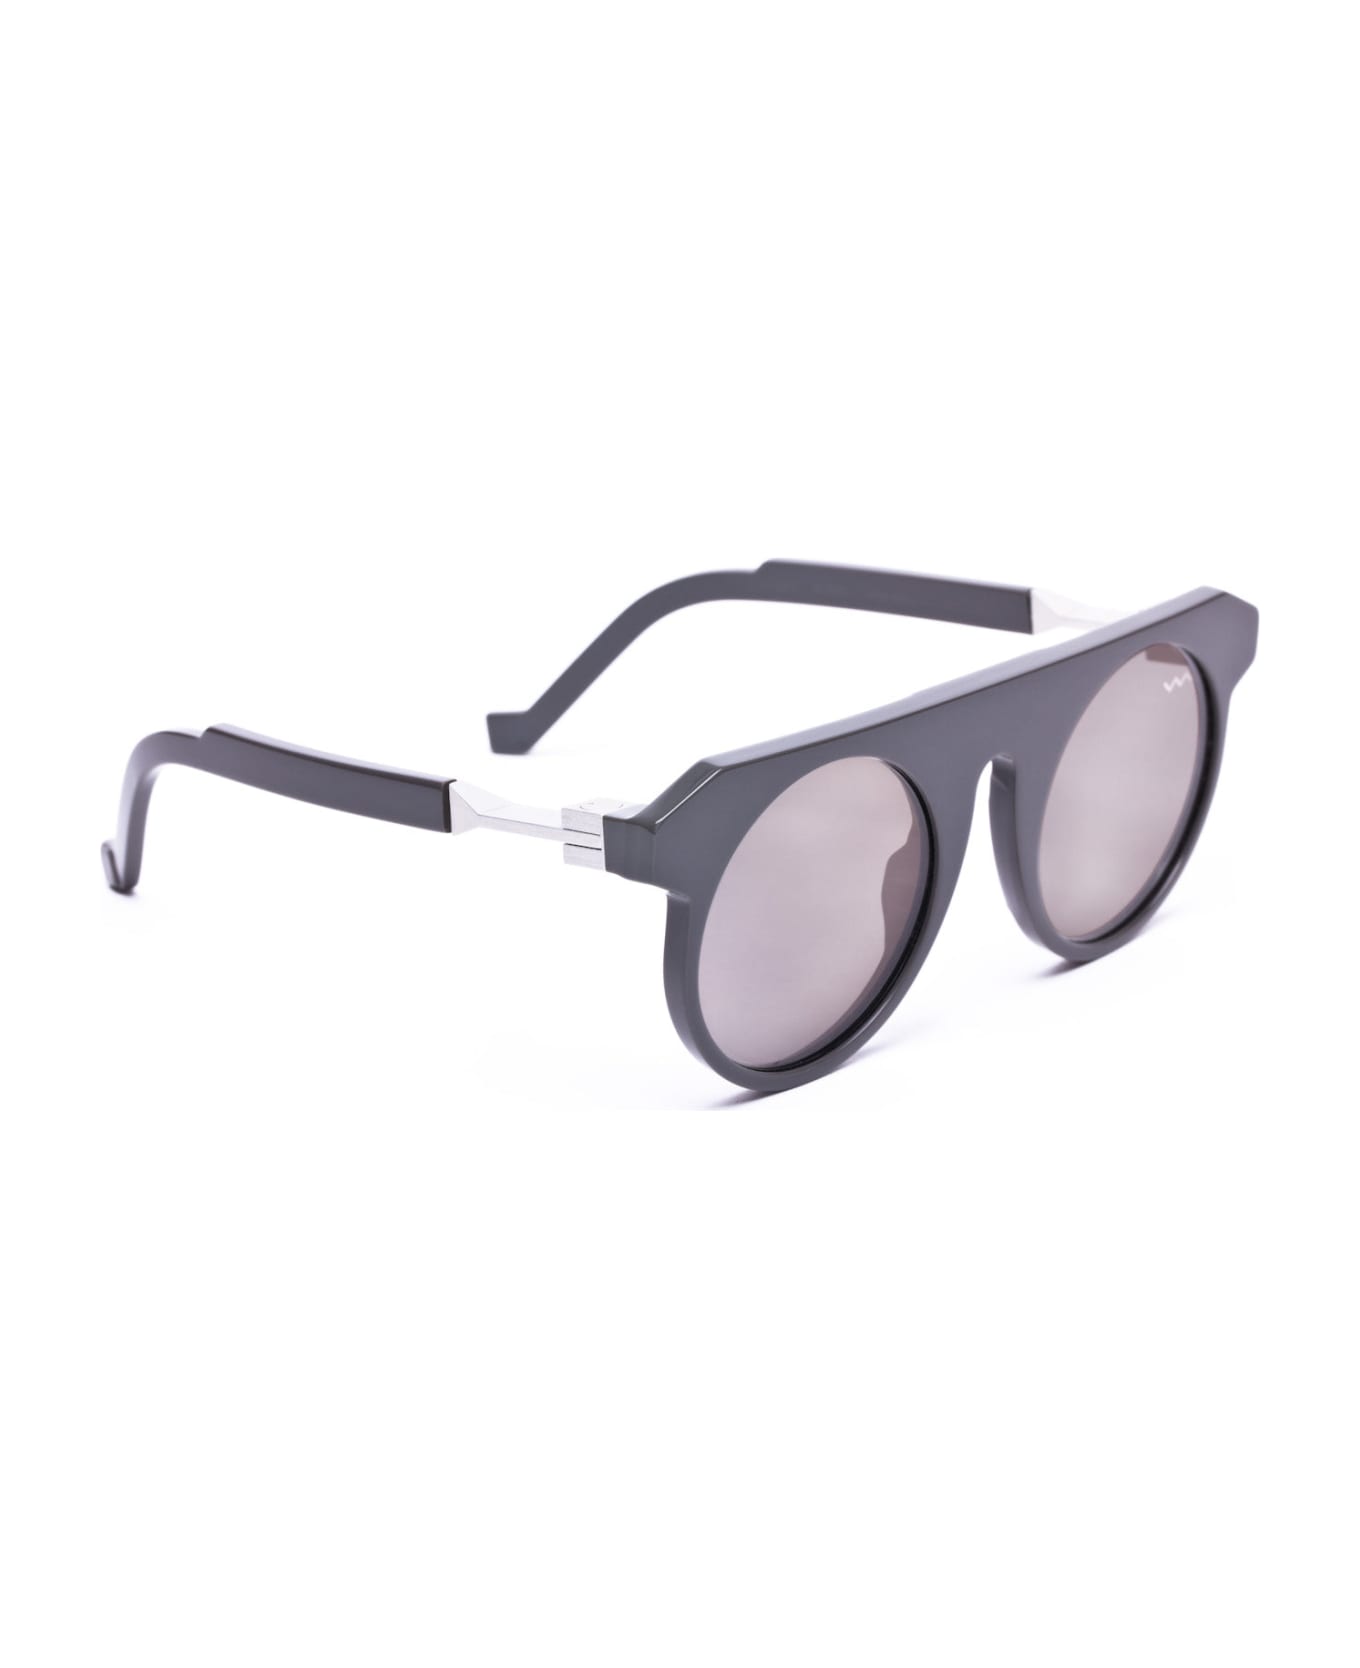 VAVA Bl0006-dark Grey Sunglasses - dark gray